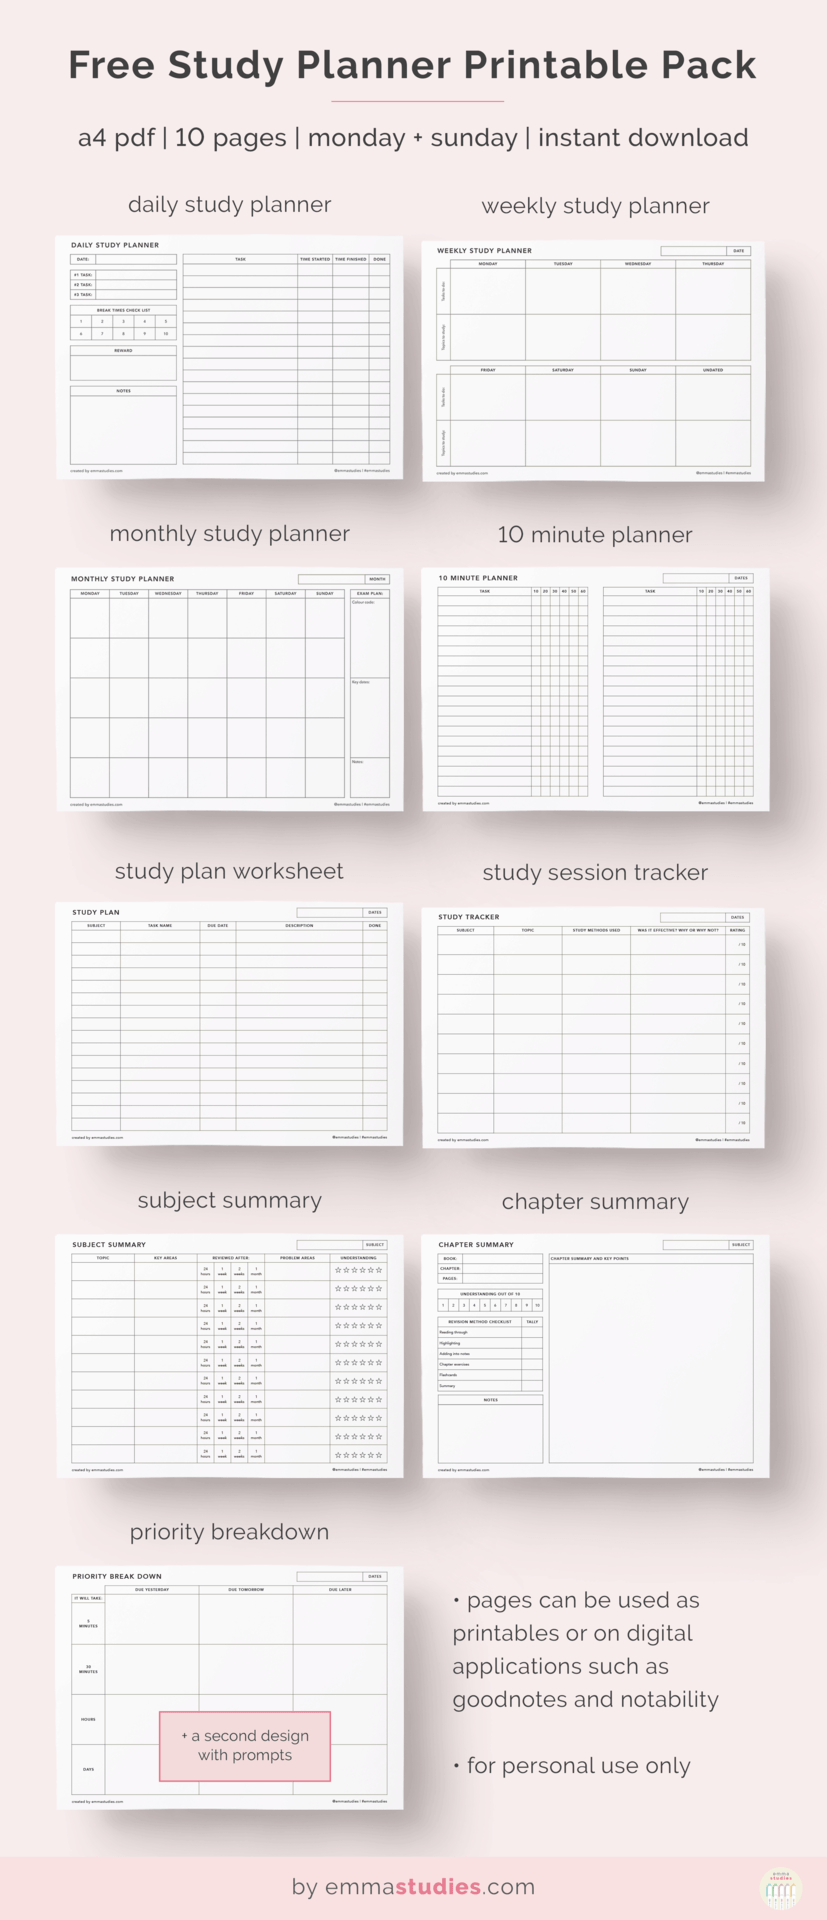 Printable Daily Study Planner